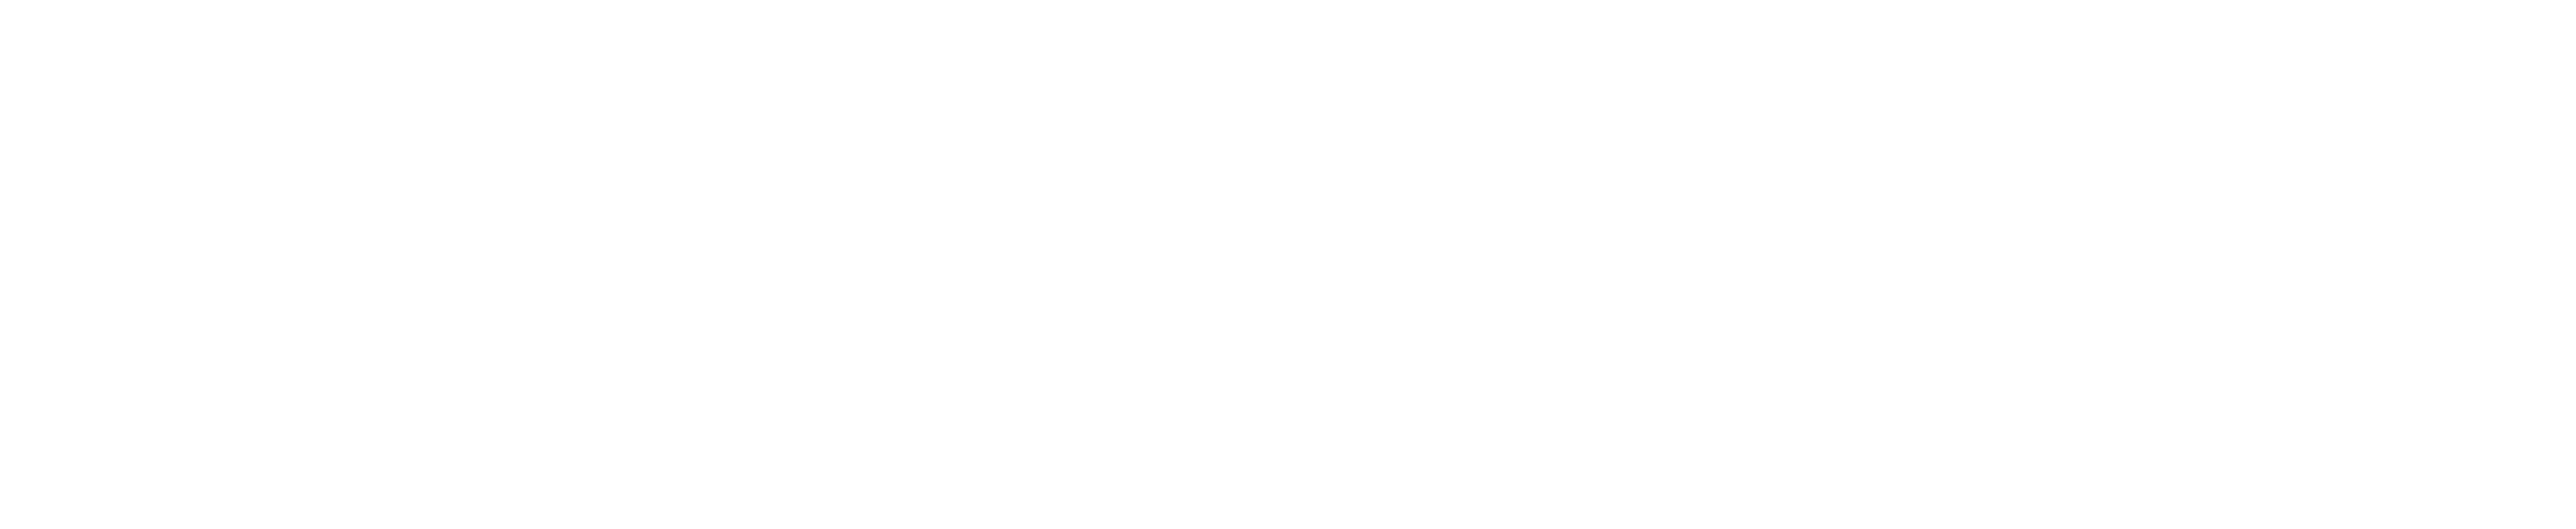 Race Factory Logo, White